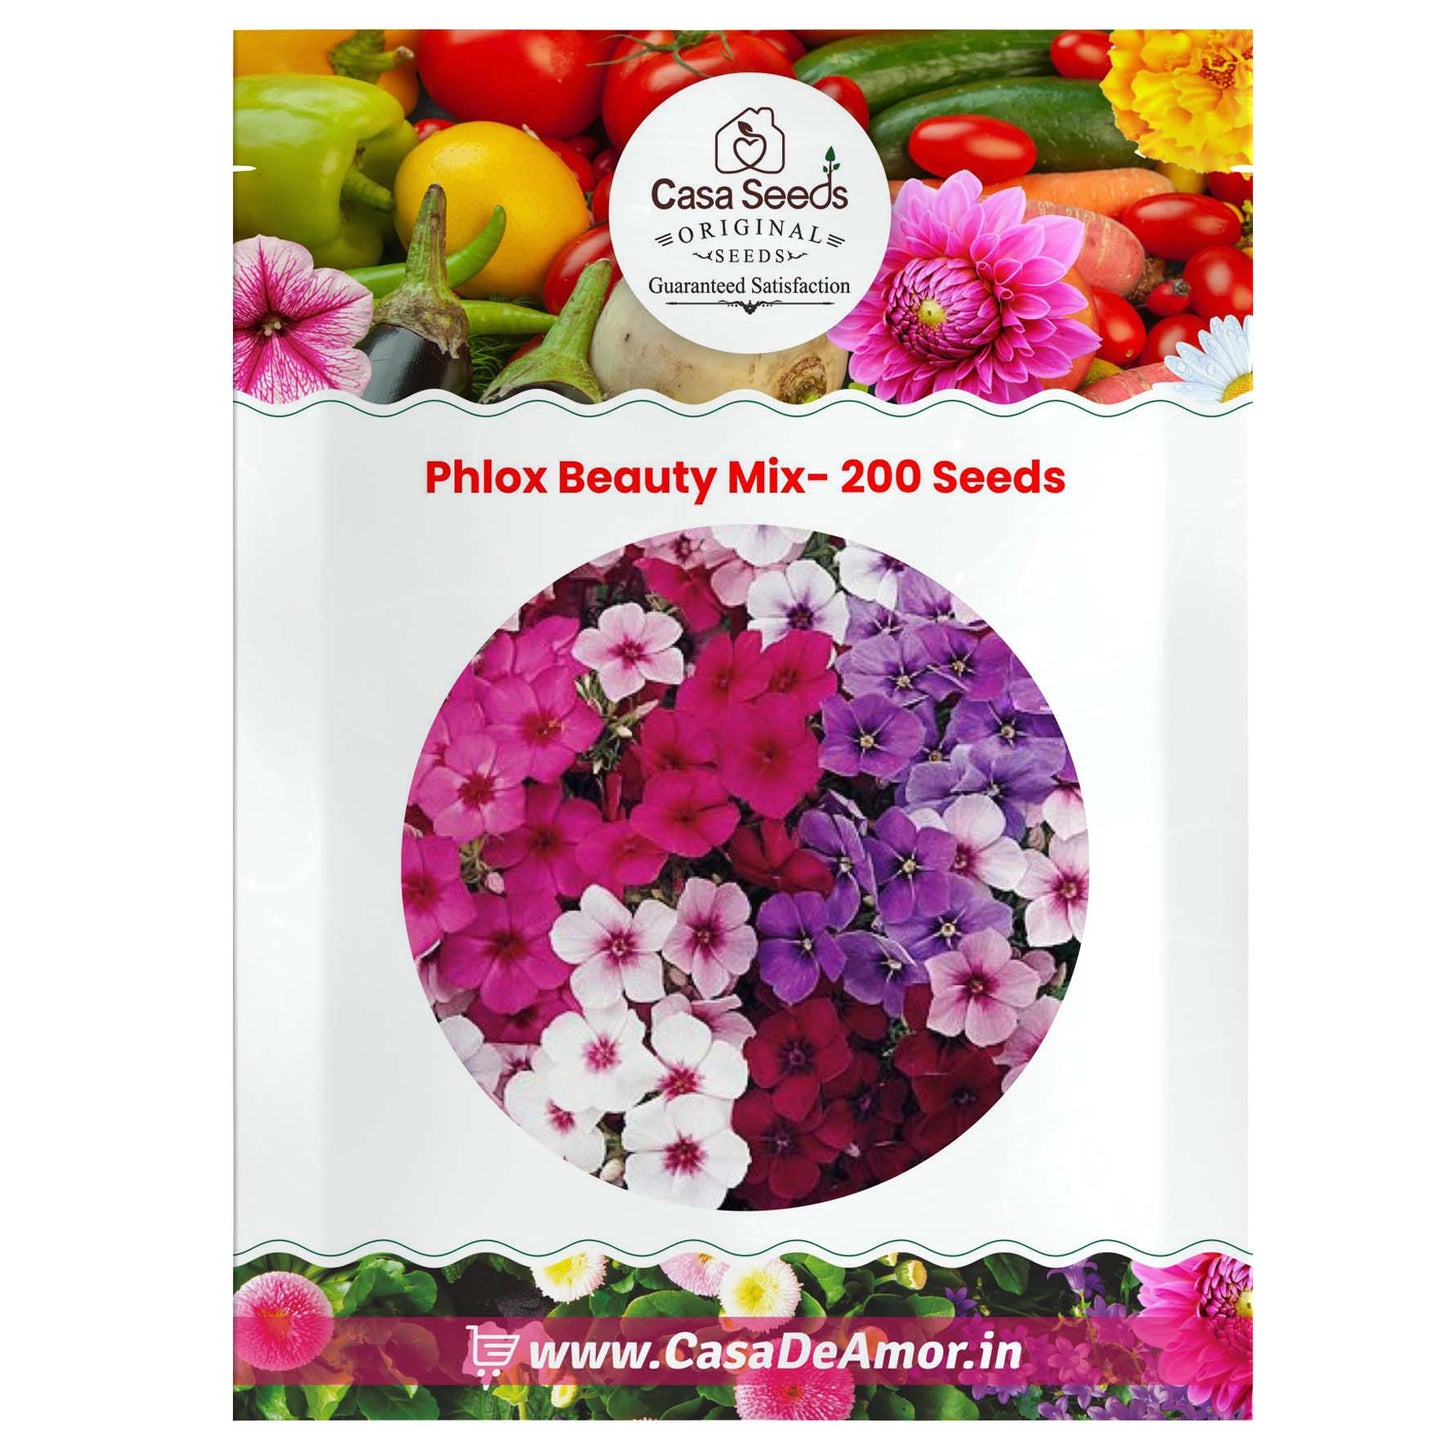 Phlox Beauty Mix- 200 Seeds